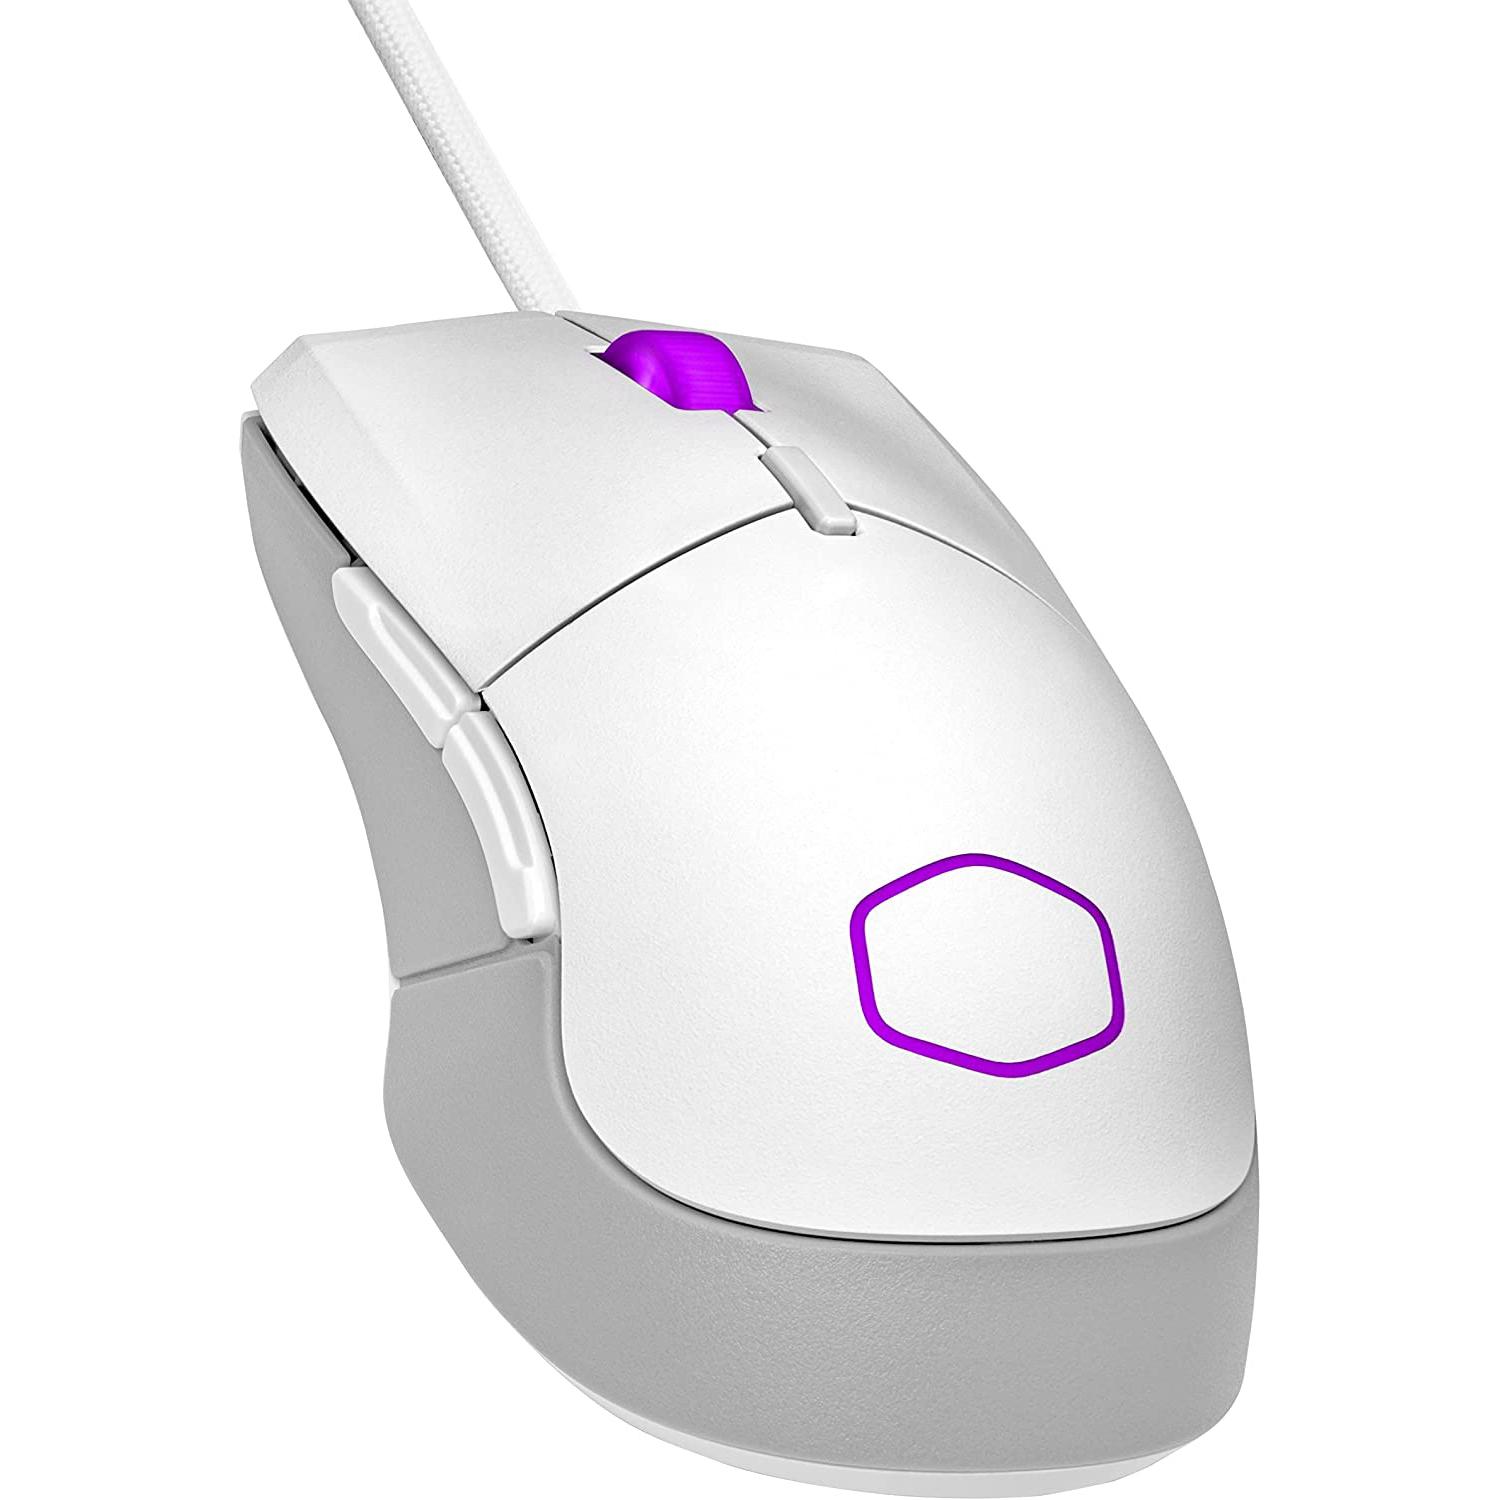 Cooler Master MM310 Gaming Mouse for $4.14 After Rebate